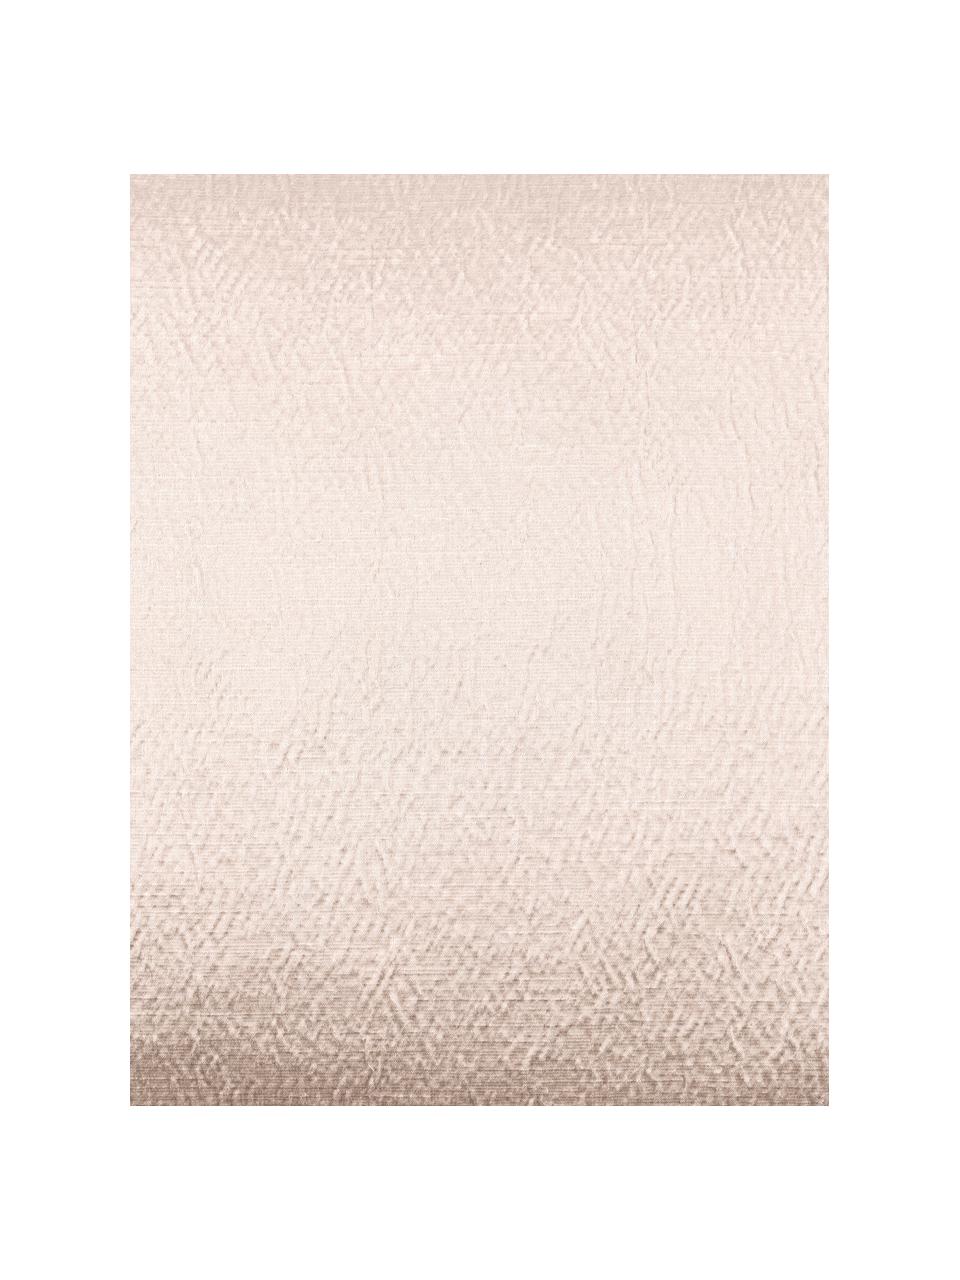 Federa arredo color beige lucido Nilay, 56% cotone, 44% poliestere, Beige, Larg. 40 x Lung. 40 cm